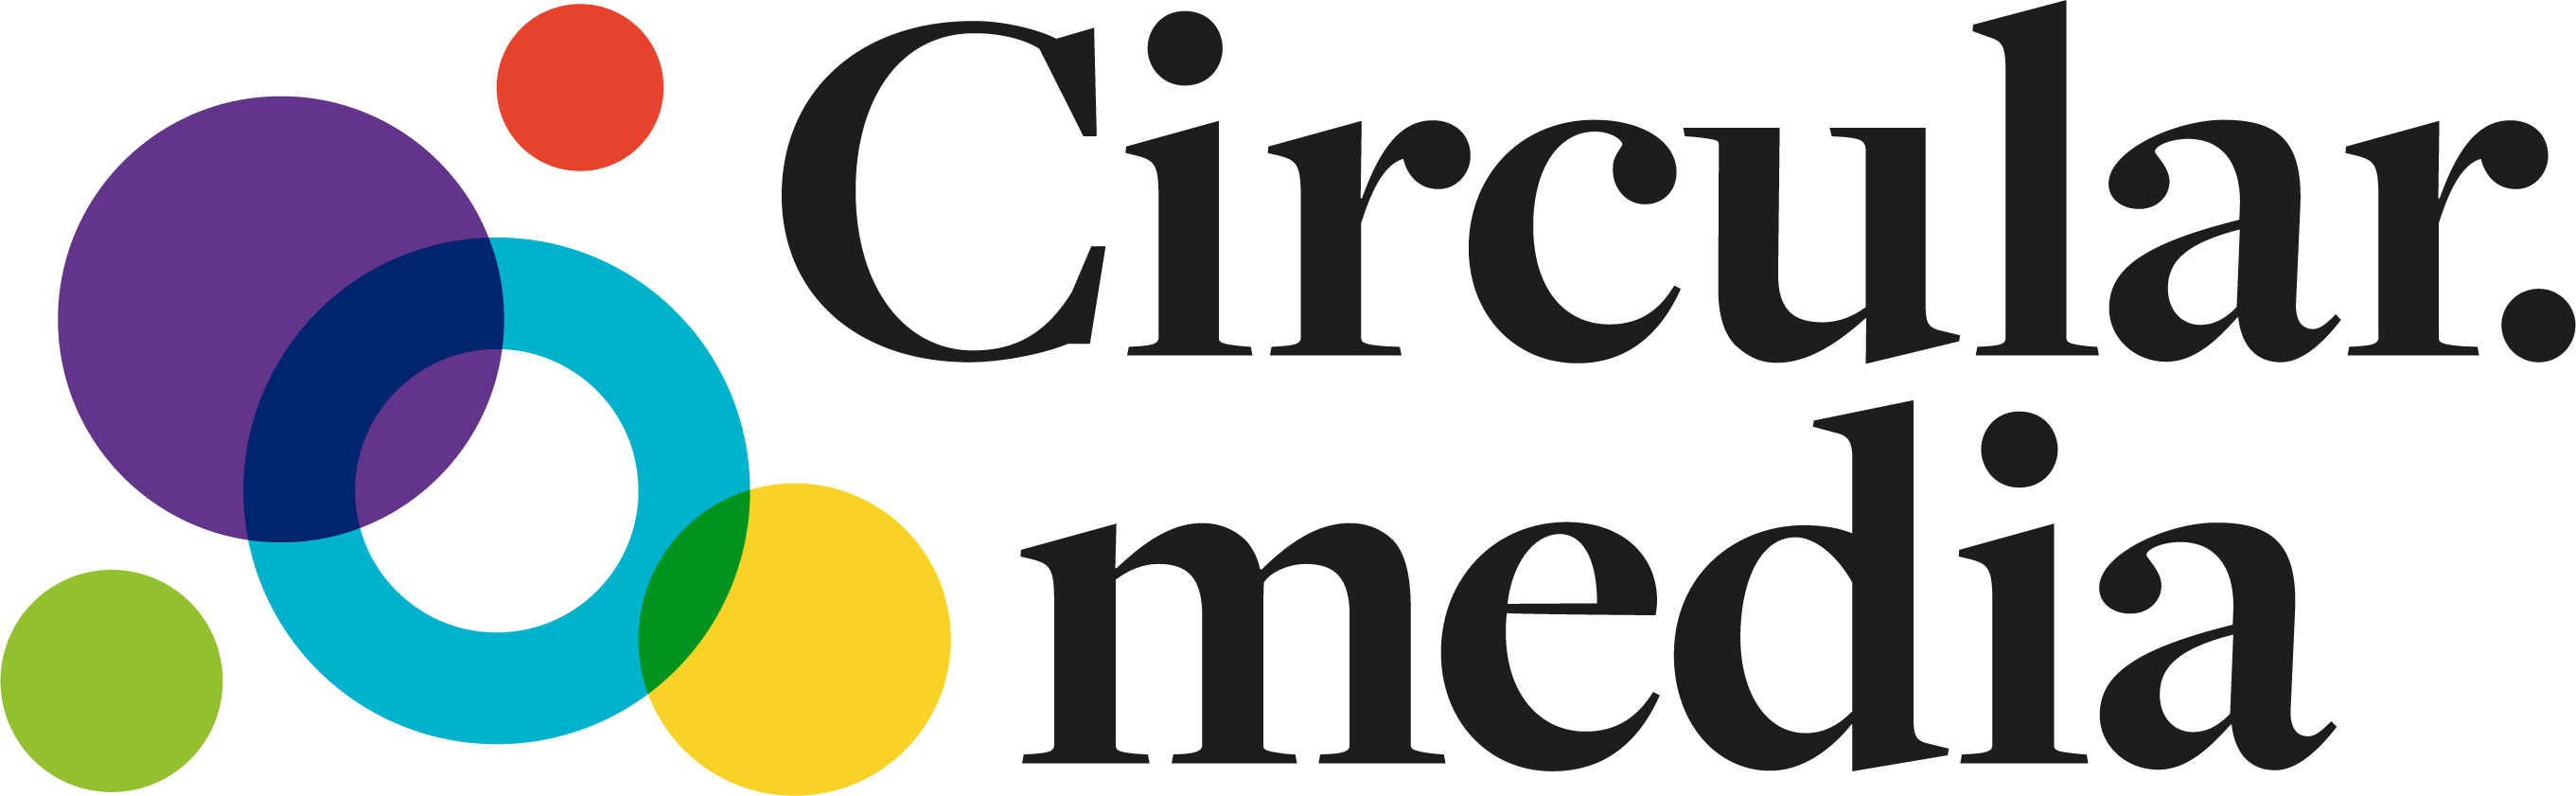 circular media logo